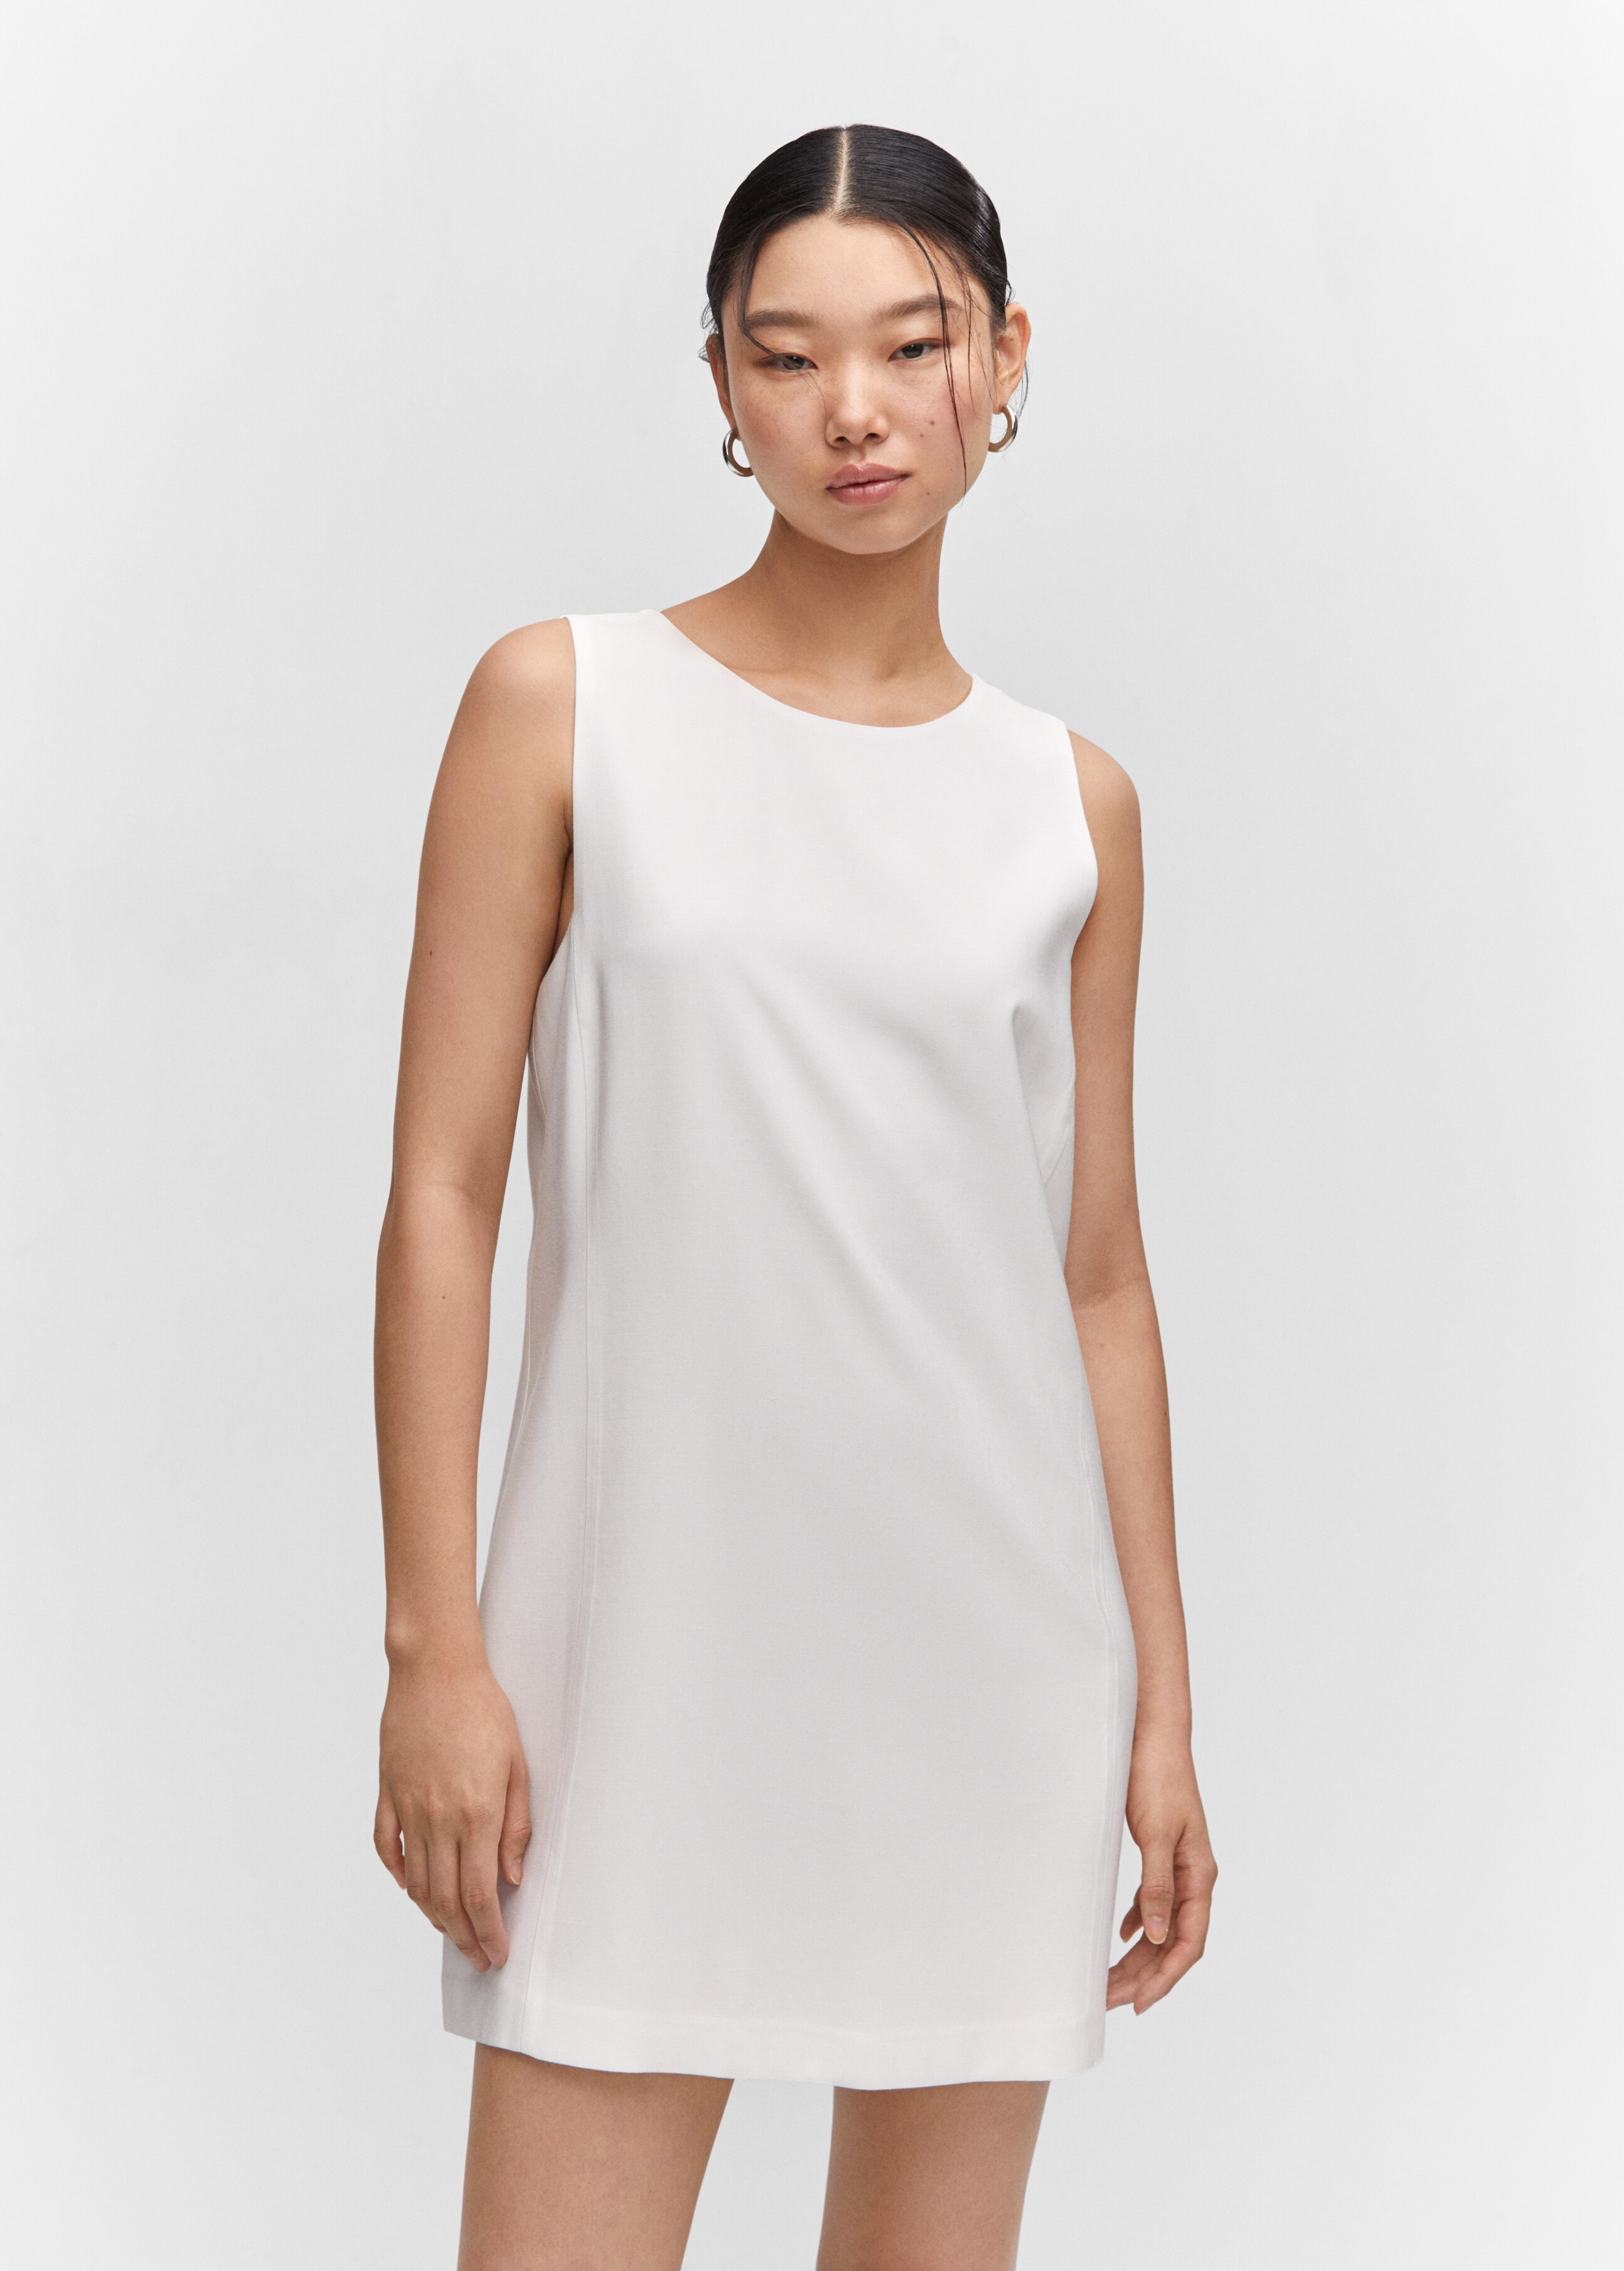 Short sleeveless dress - Medium plane